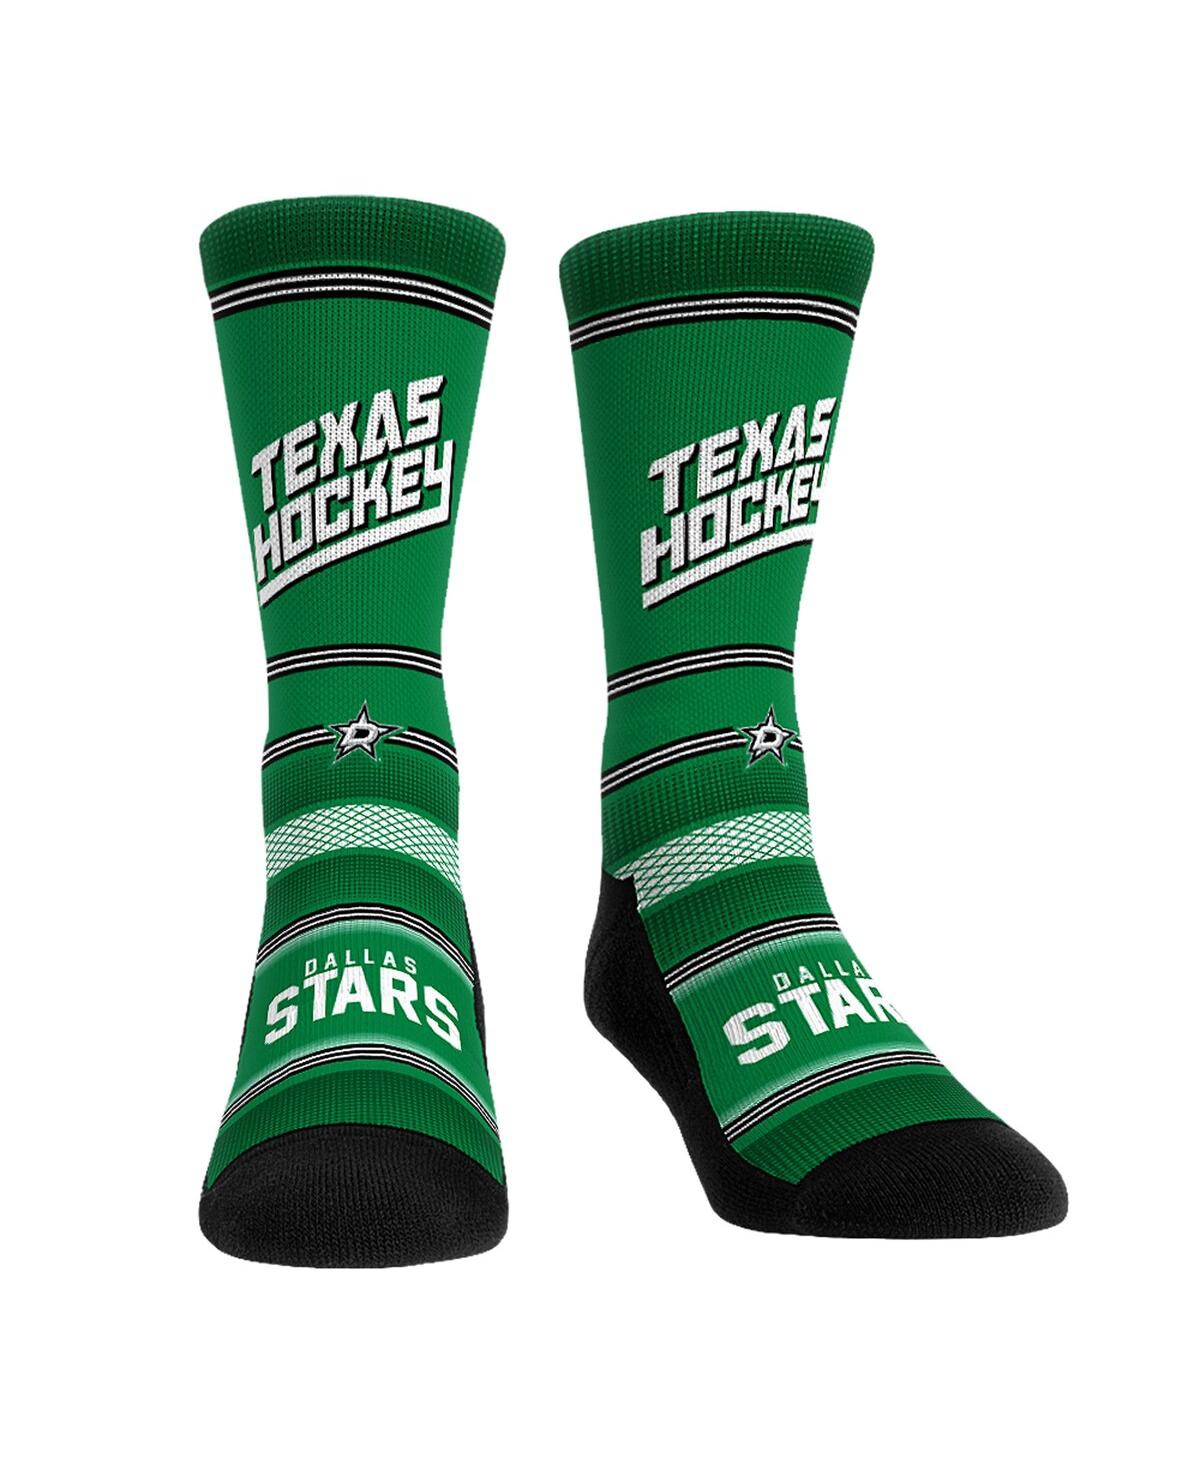 Rock 'em Men's And Women's  Socks Dallas Stars Team Slogan Crew Socks In Green